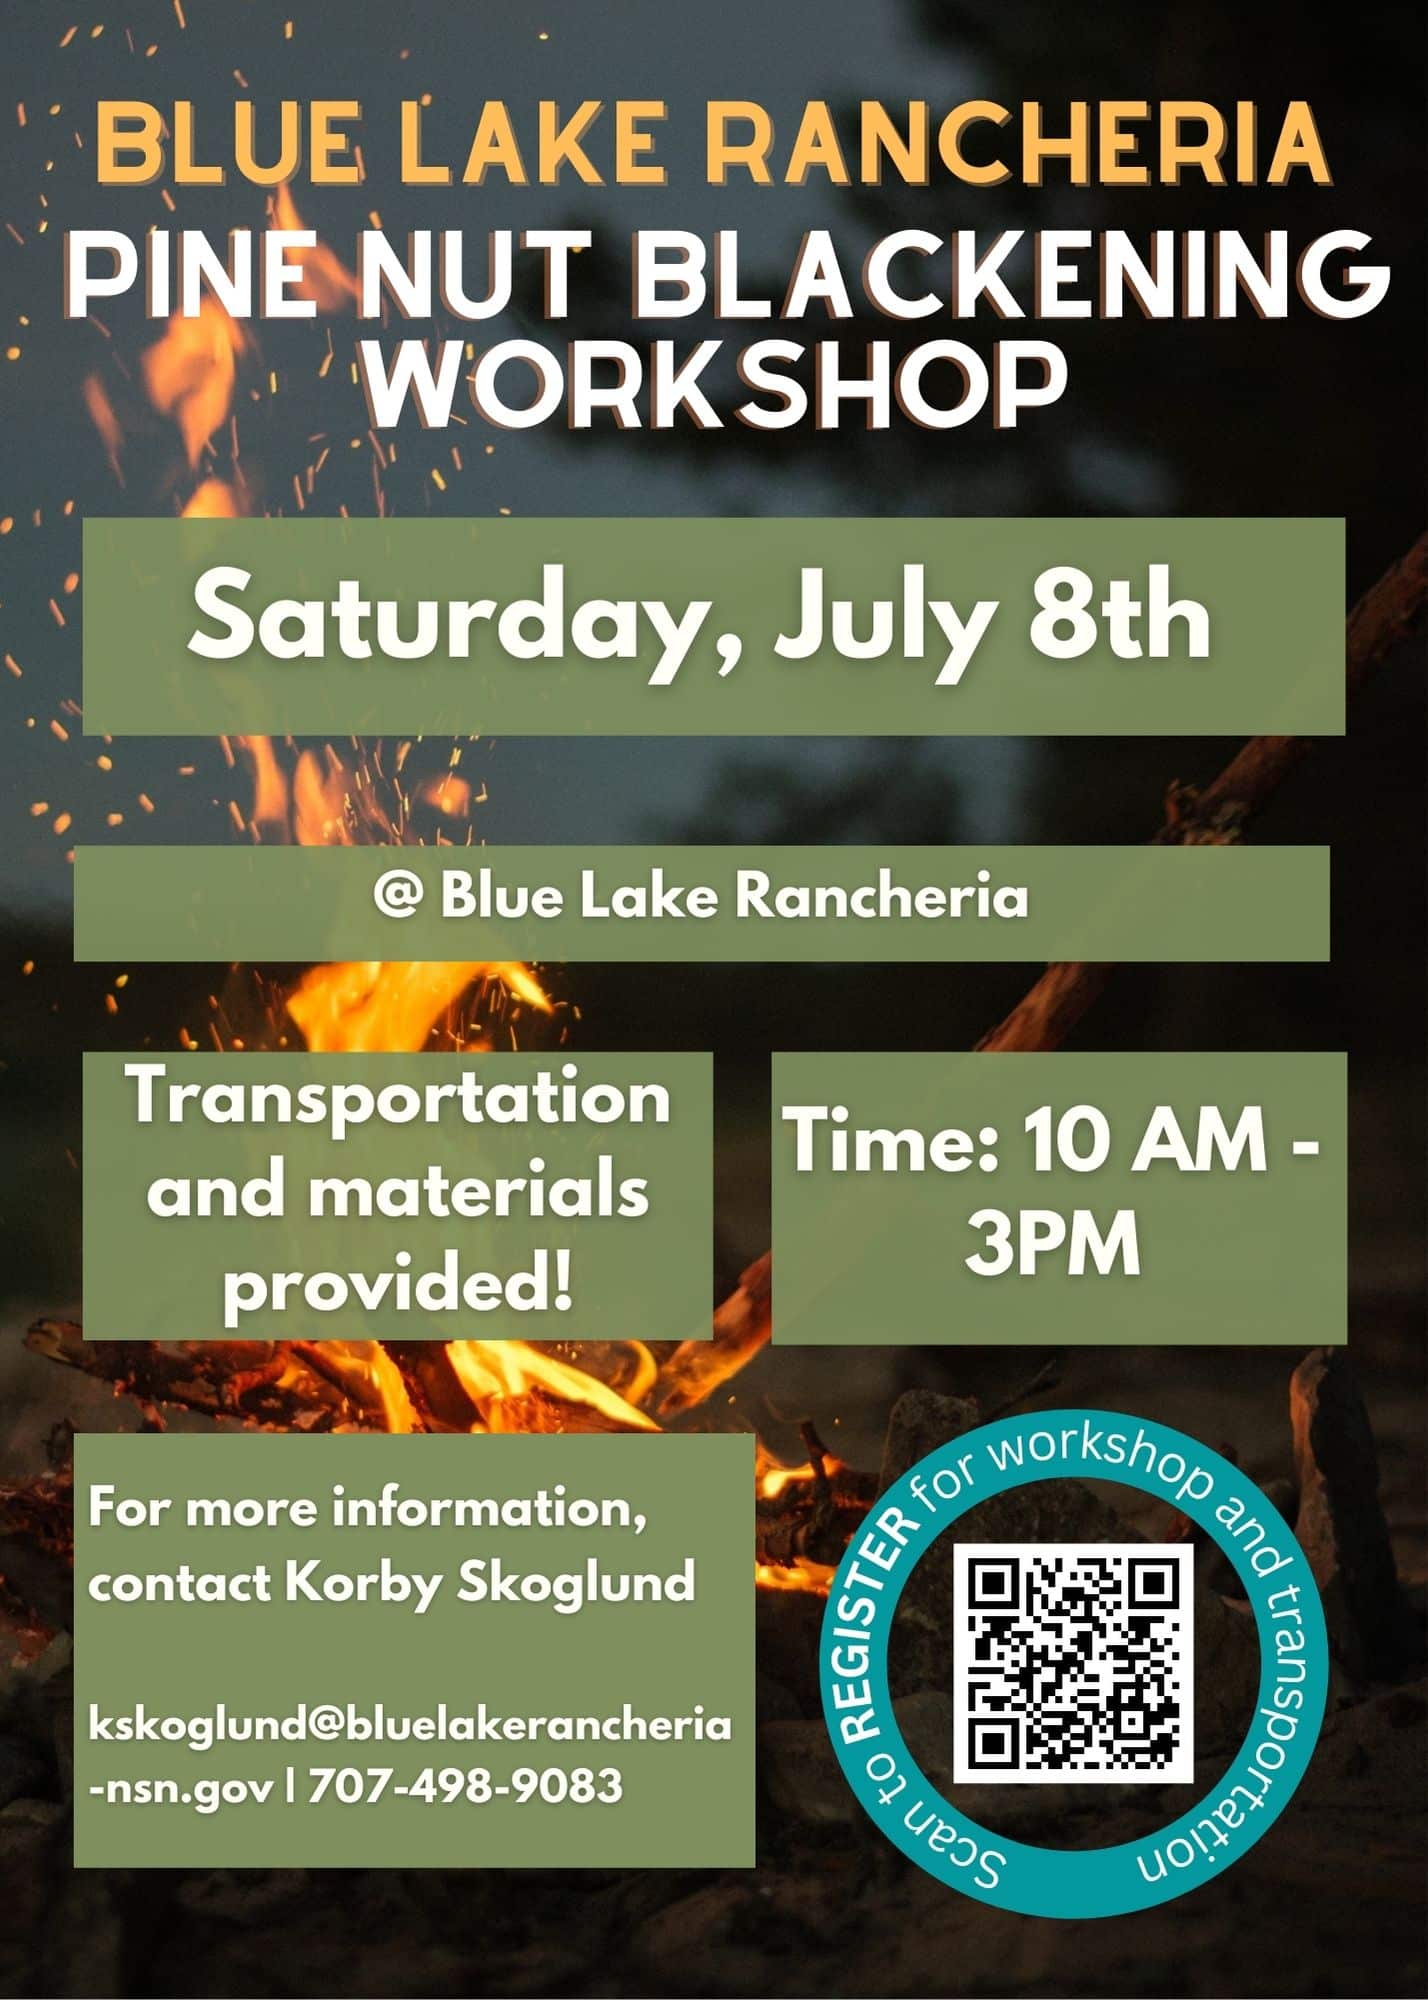 Featured image for “Pine Nut Blackening Workshop”